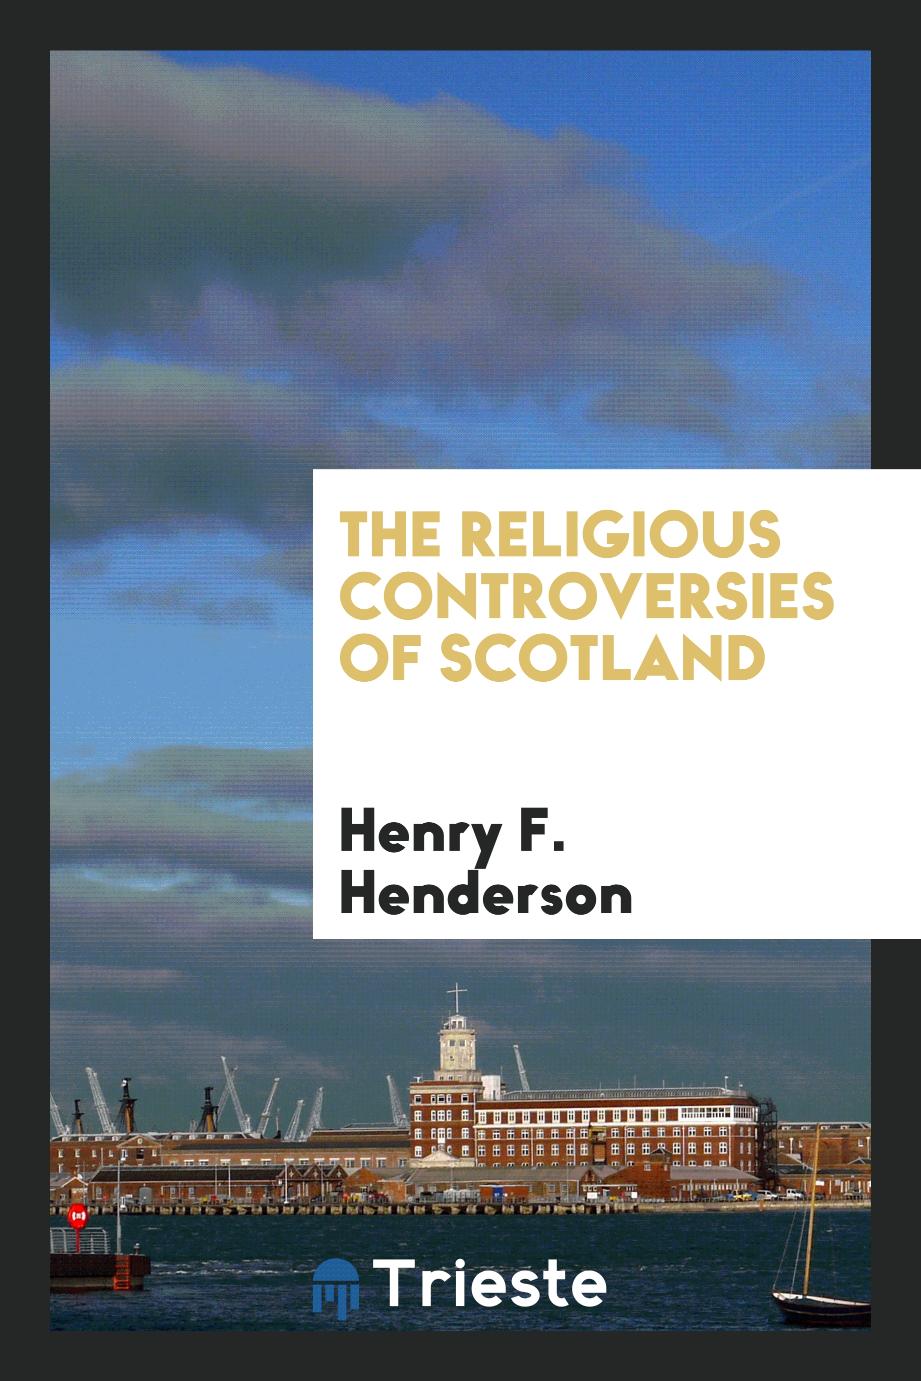 The religious controversies of Scotland